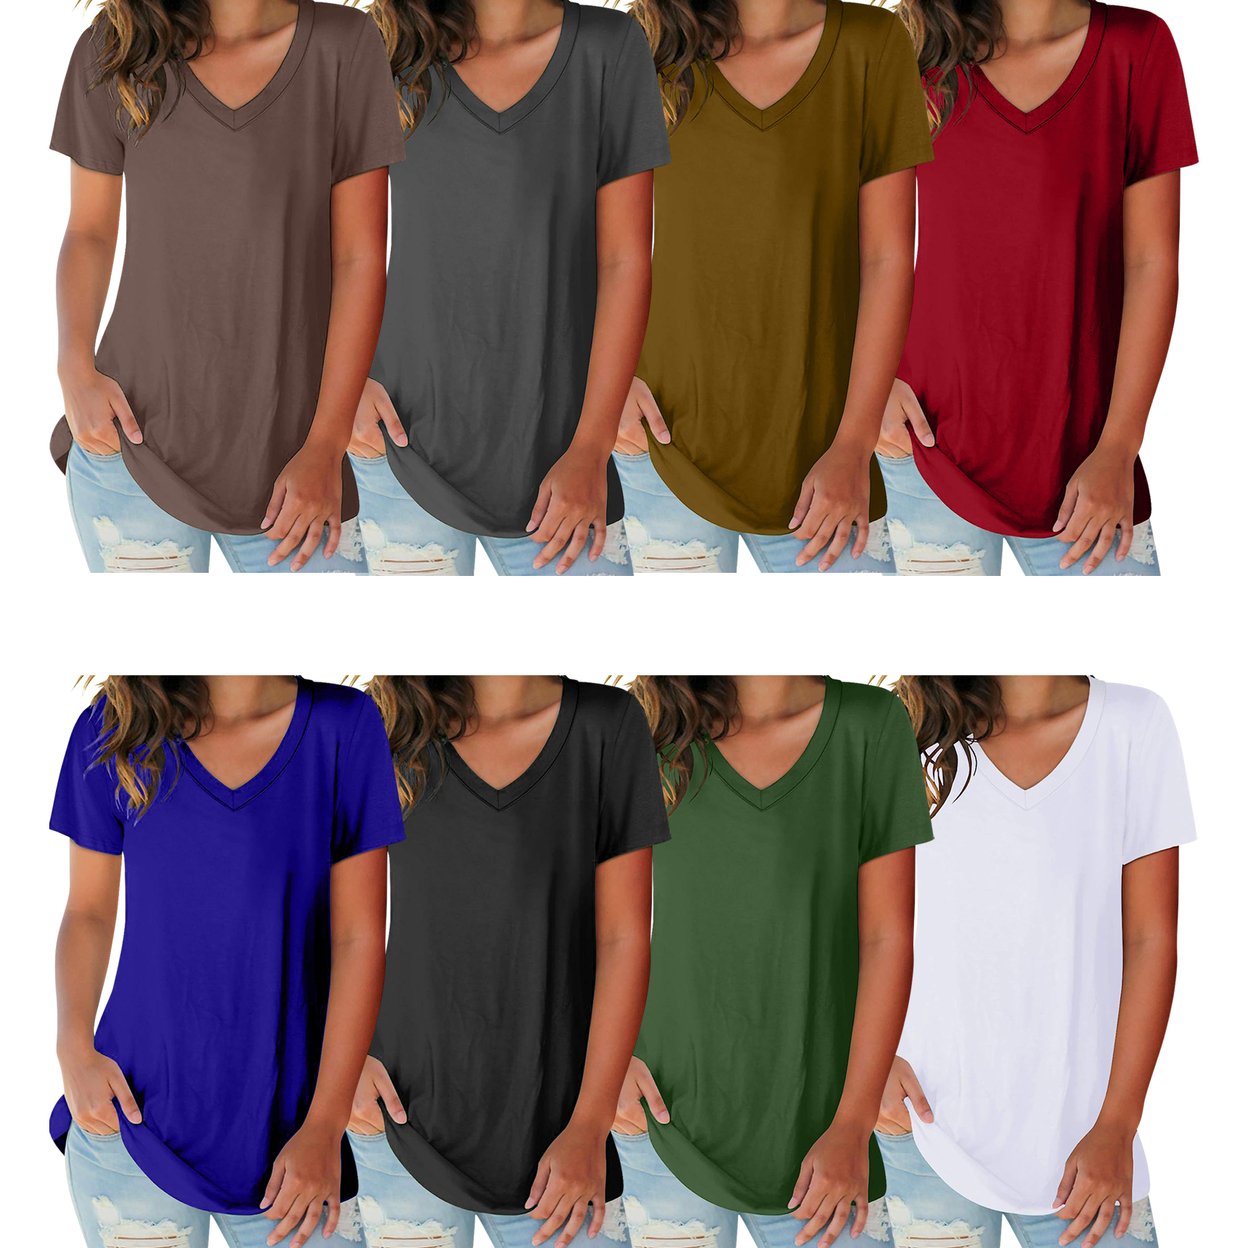 3-Pack: Women's Ultra Soft Smooth Cotton Blend Basic V-Neck Short Sleeve Shirts - Black, White, Green, Xx-large